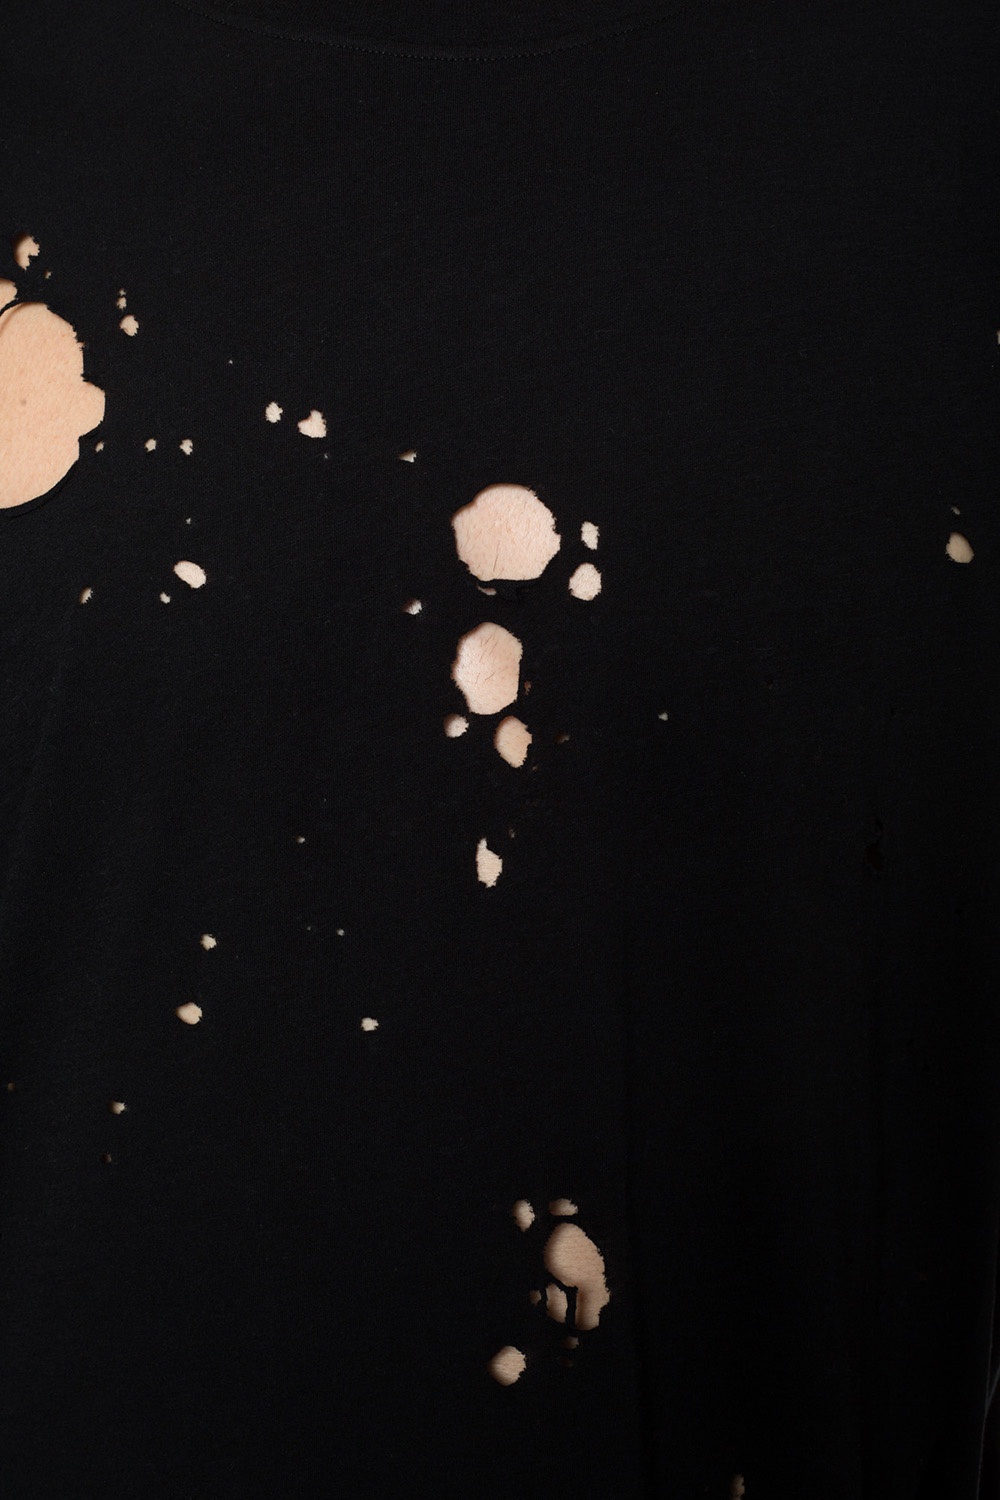 Ann Demeulemeester T-shirt with holes | Men's Clothing | Vitkac